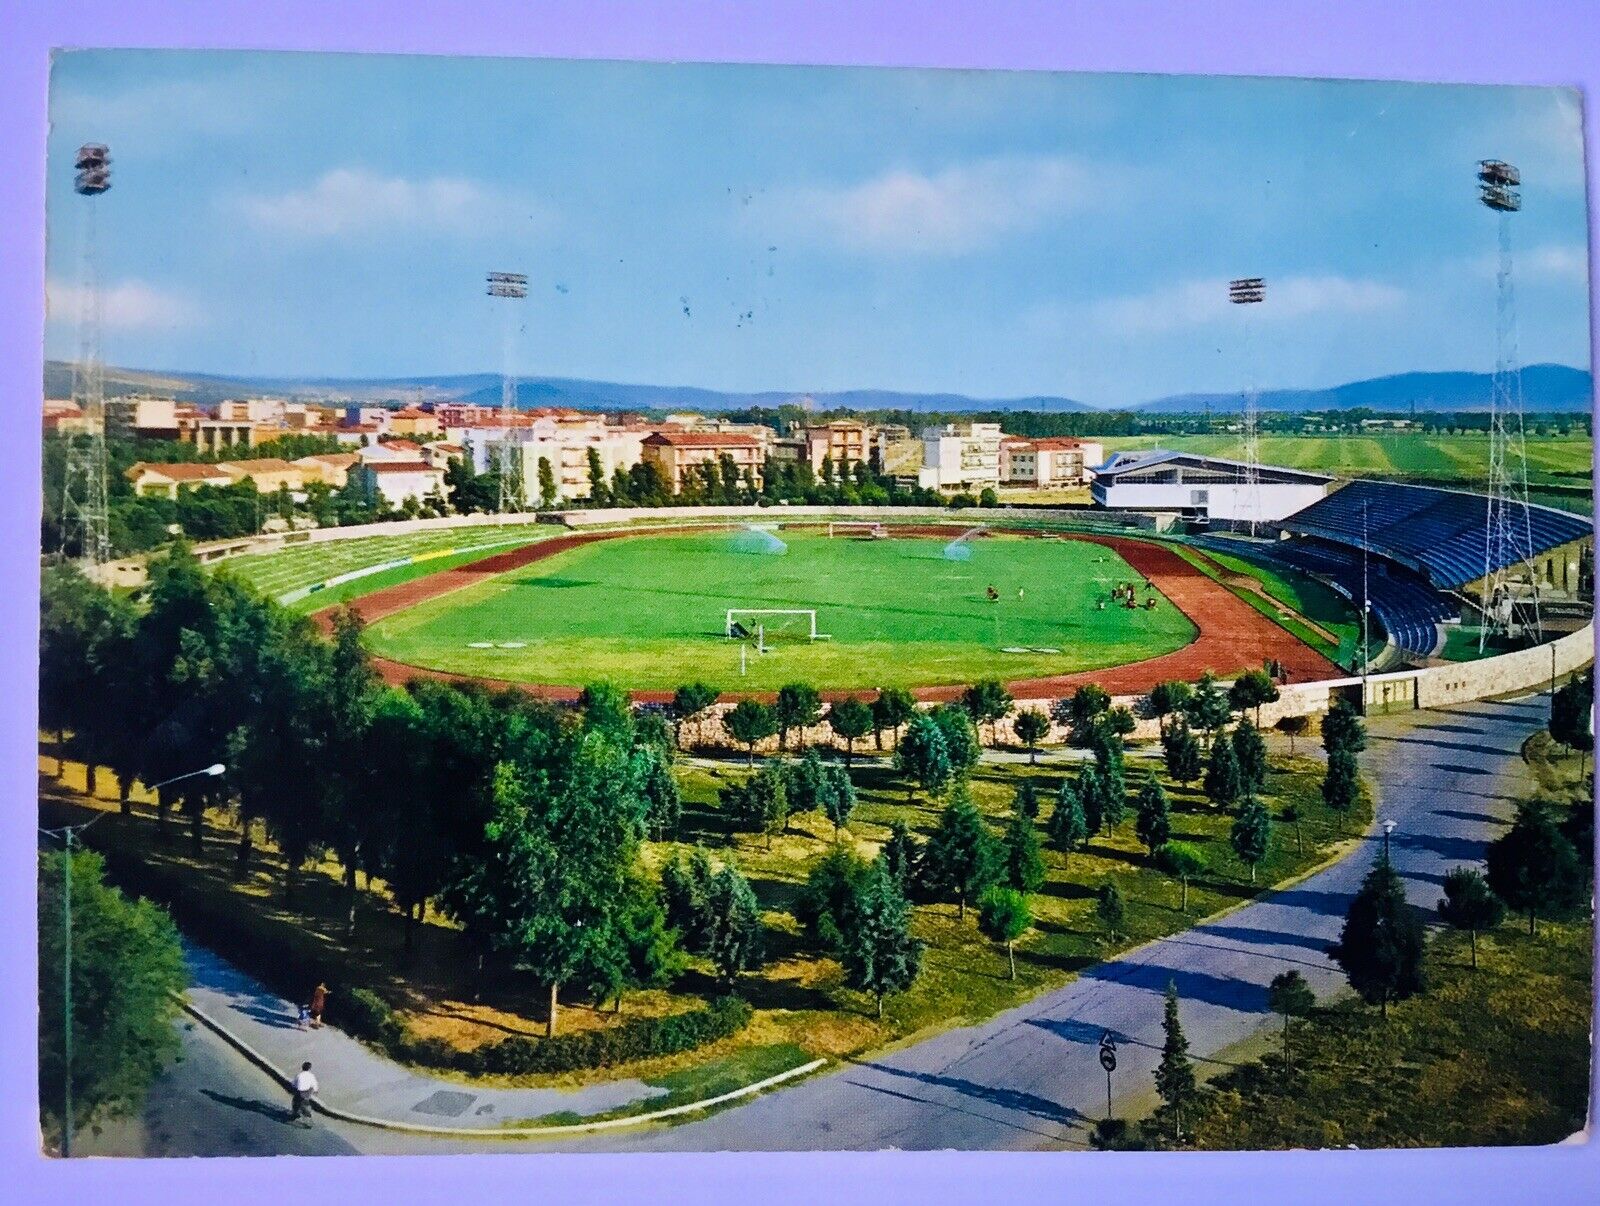 Stadio Comunale Olimpico di Grosseto